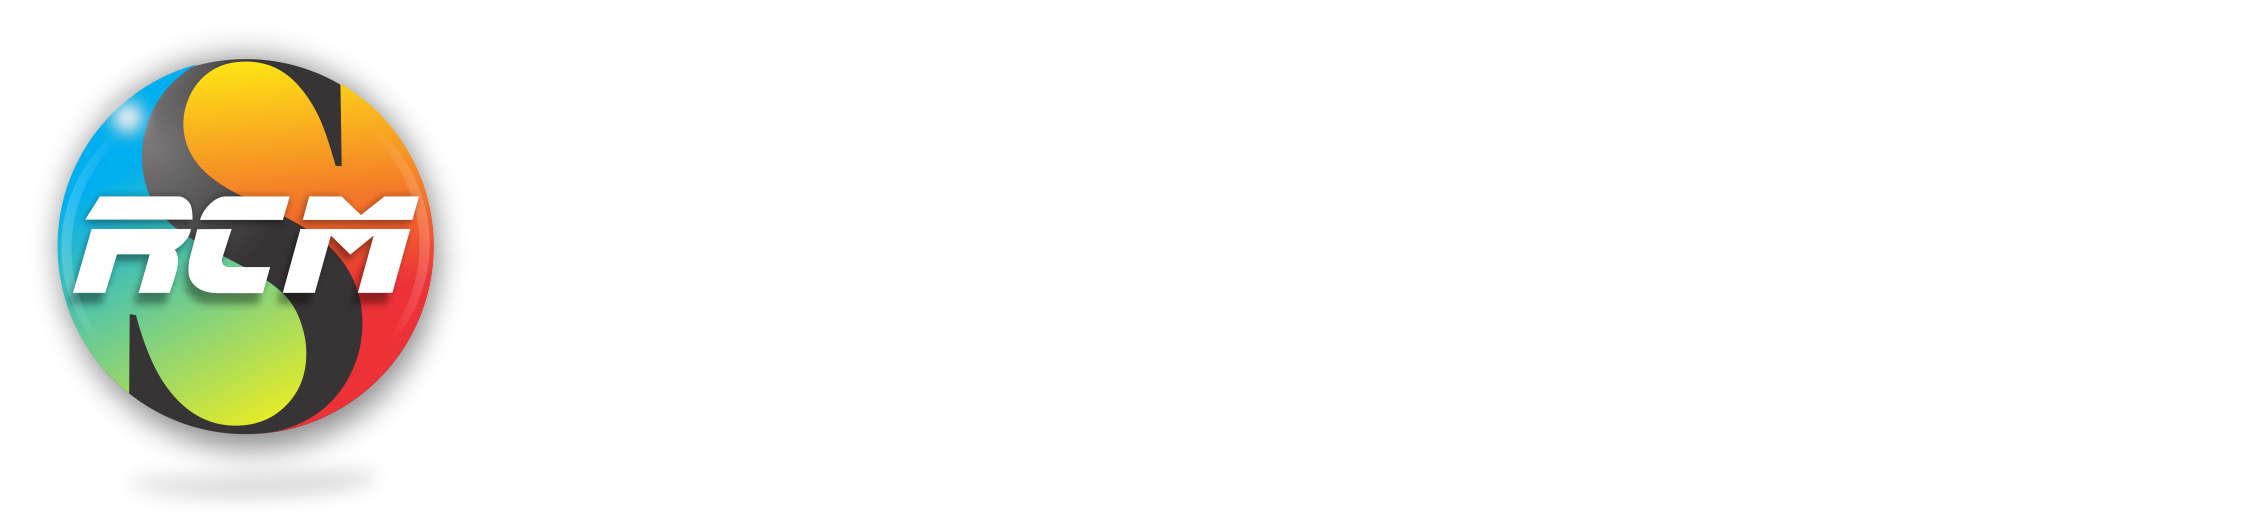 RCM SOFTWARES Logo